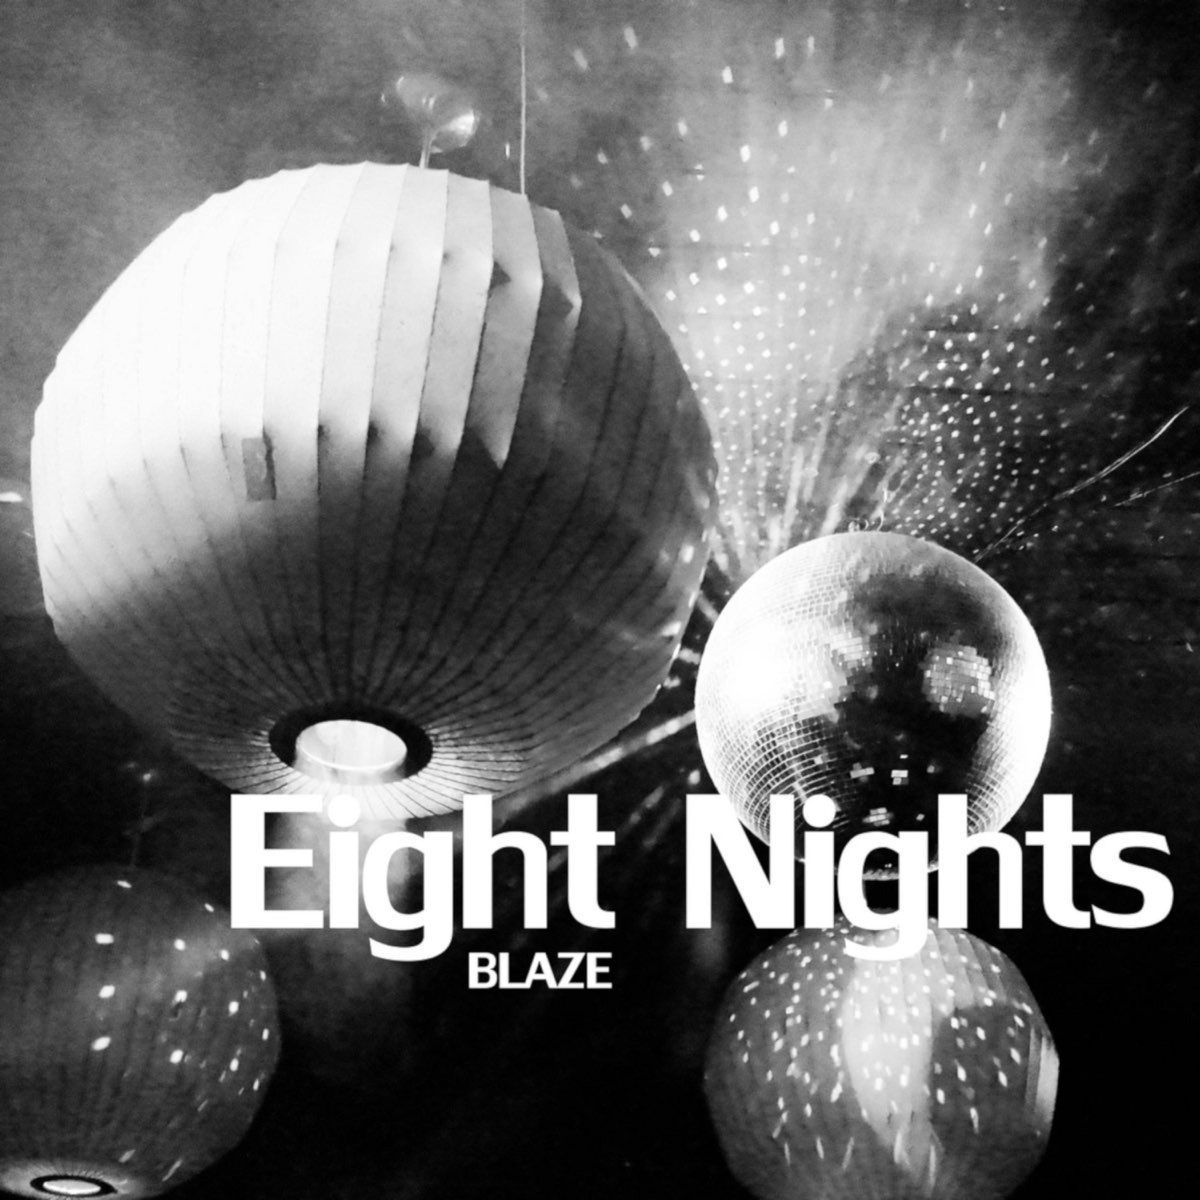 Eighth Nights. Blazing Night.